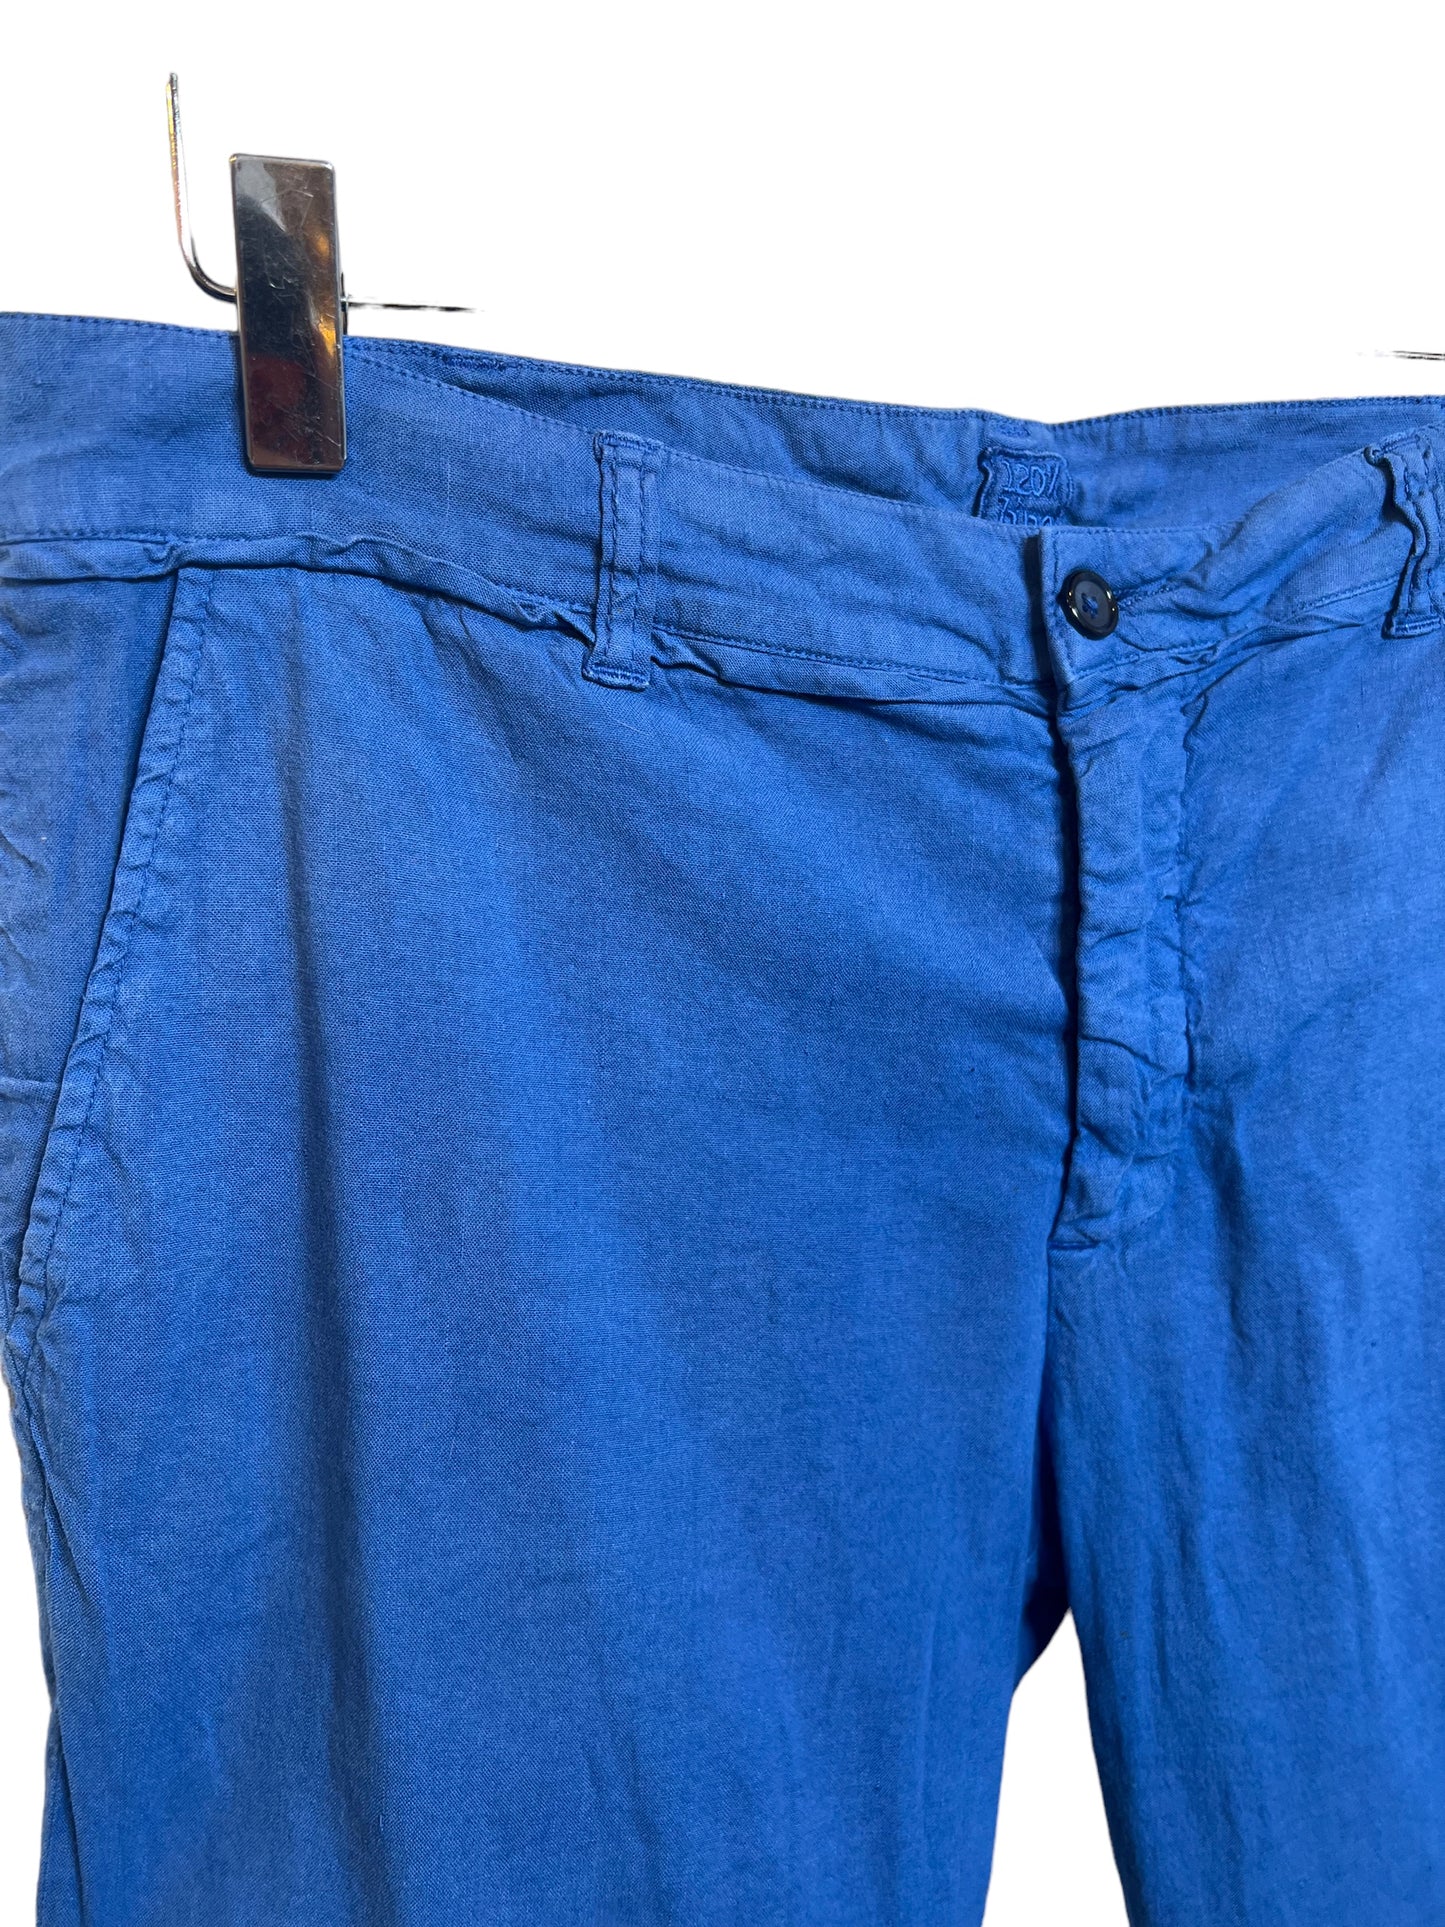 Blue Men’s Linen Trousers (Size W30)